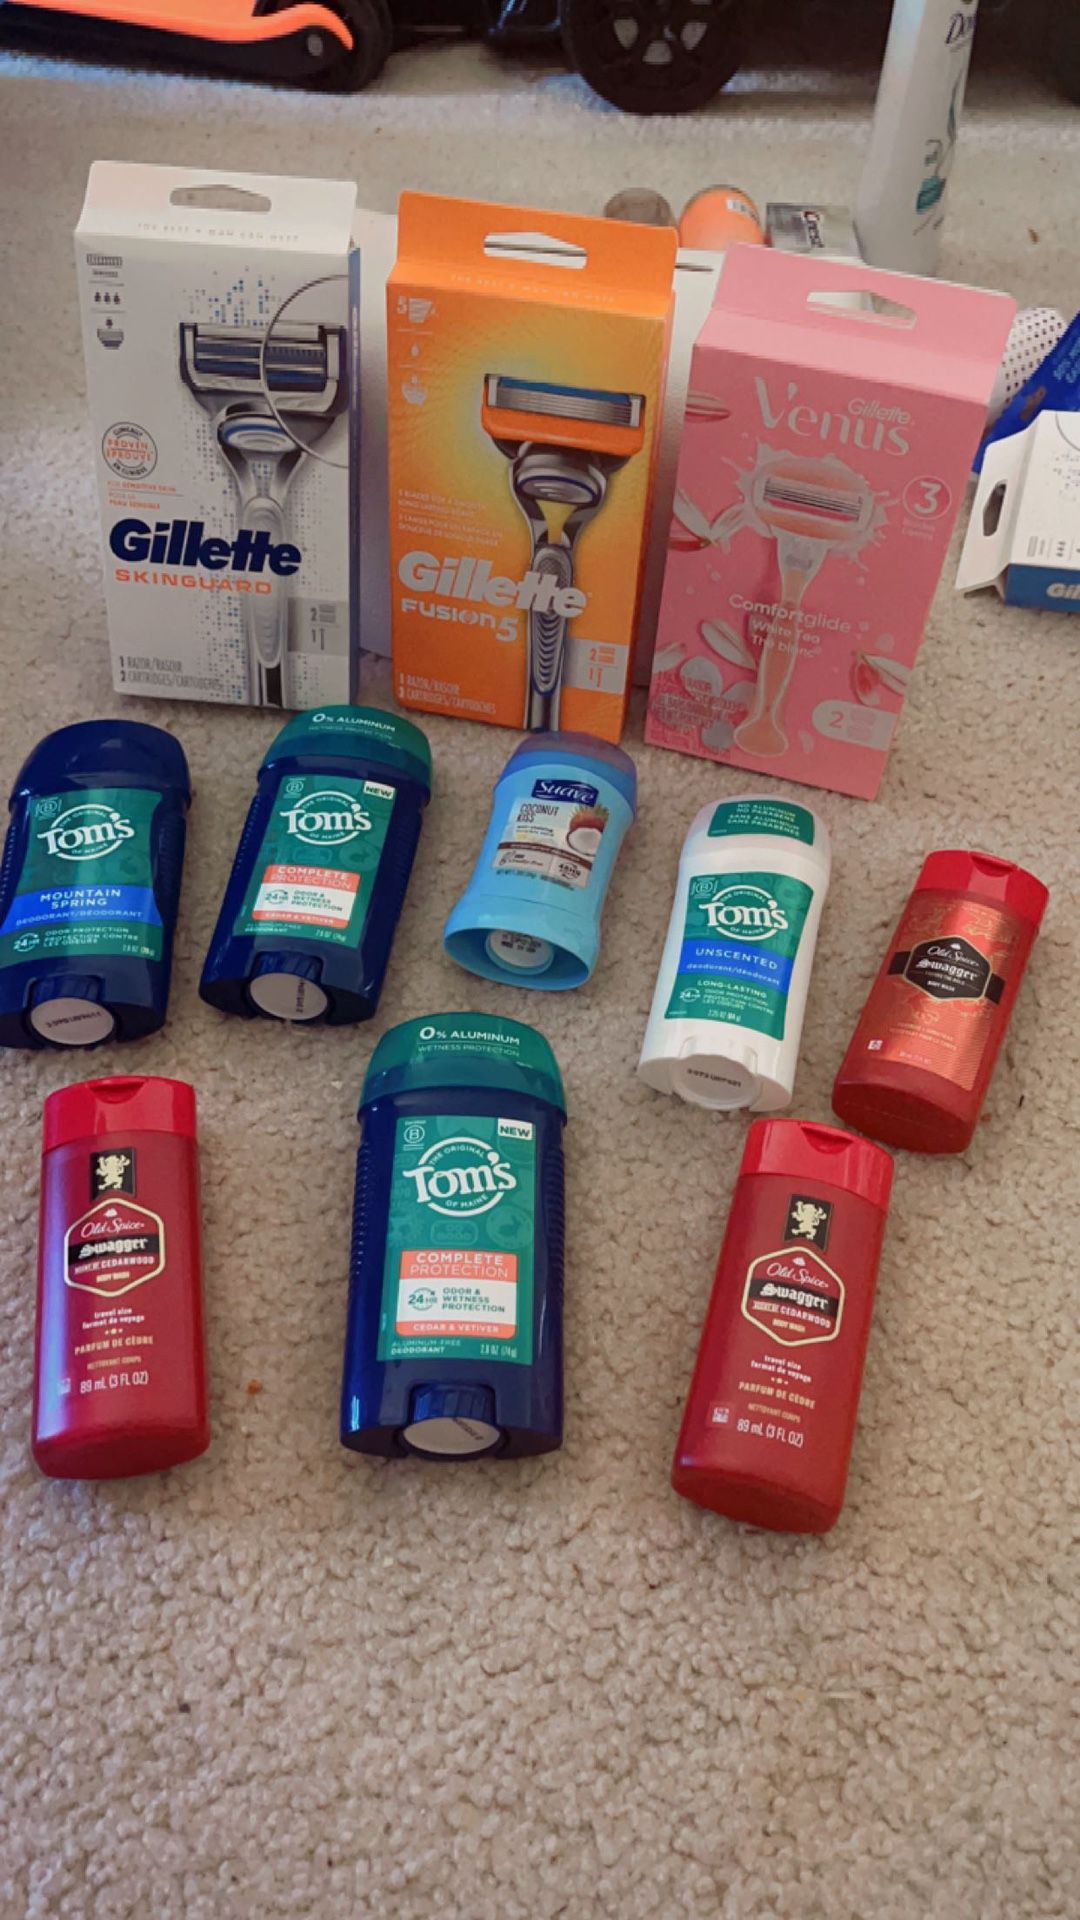 Take All for $20   3 boxes Gillette razor 3 Tom’s deodorant (1 74g & 2 79g) 3 old spice (89ml ea.) 1 suave deodorant 34g